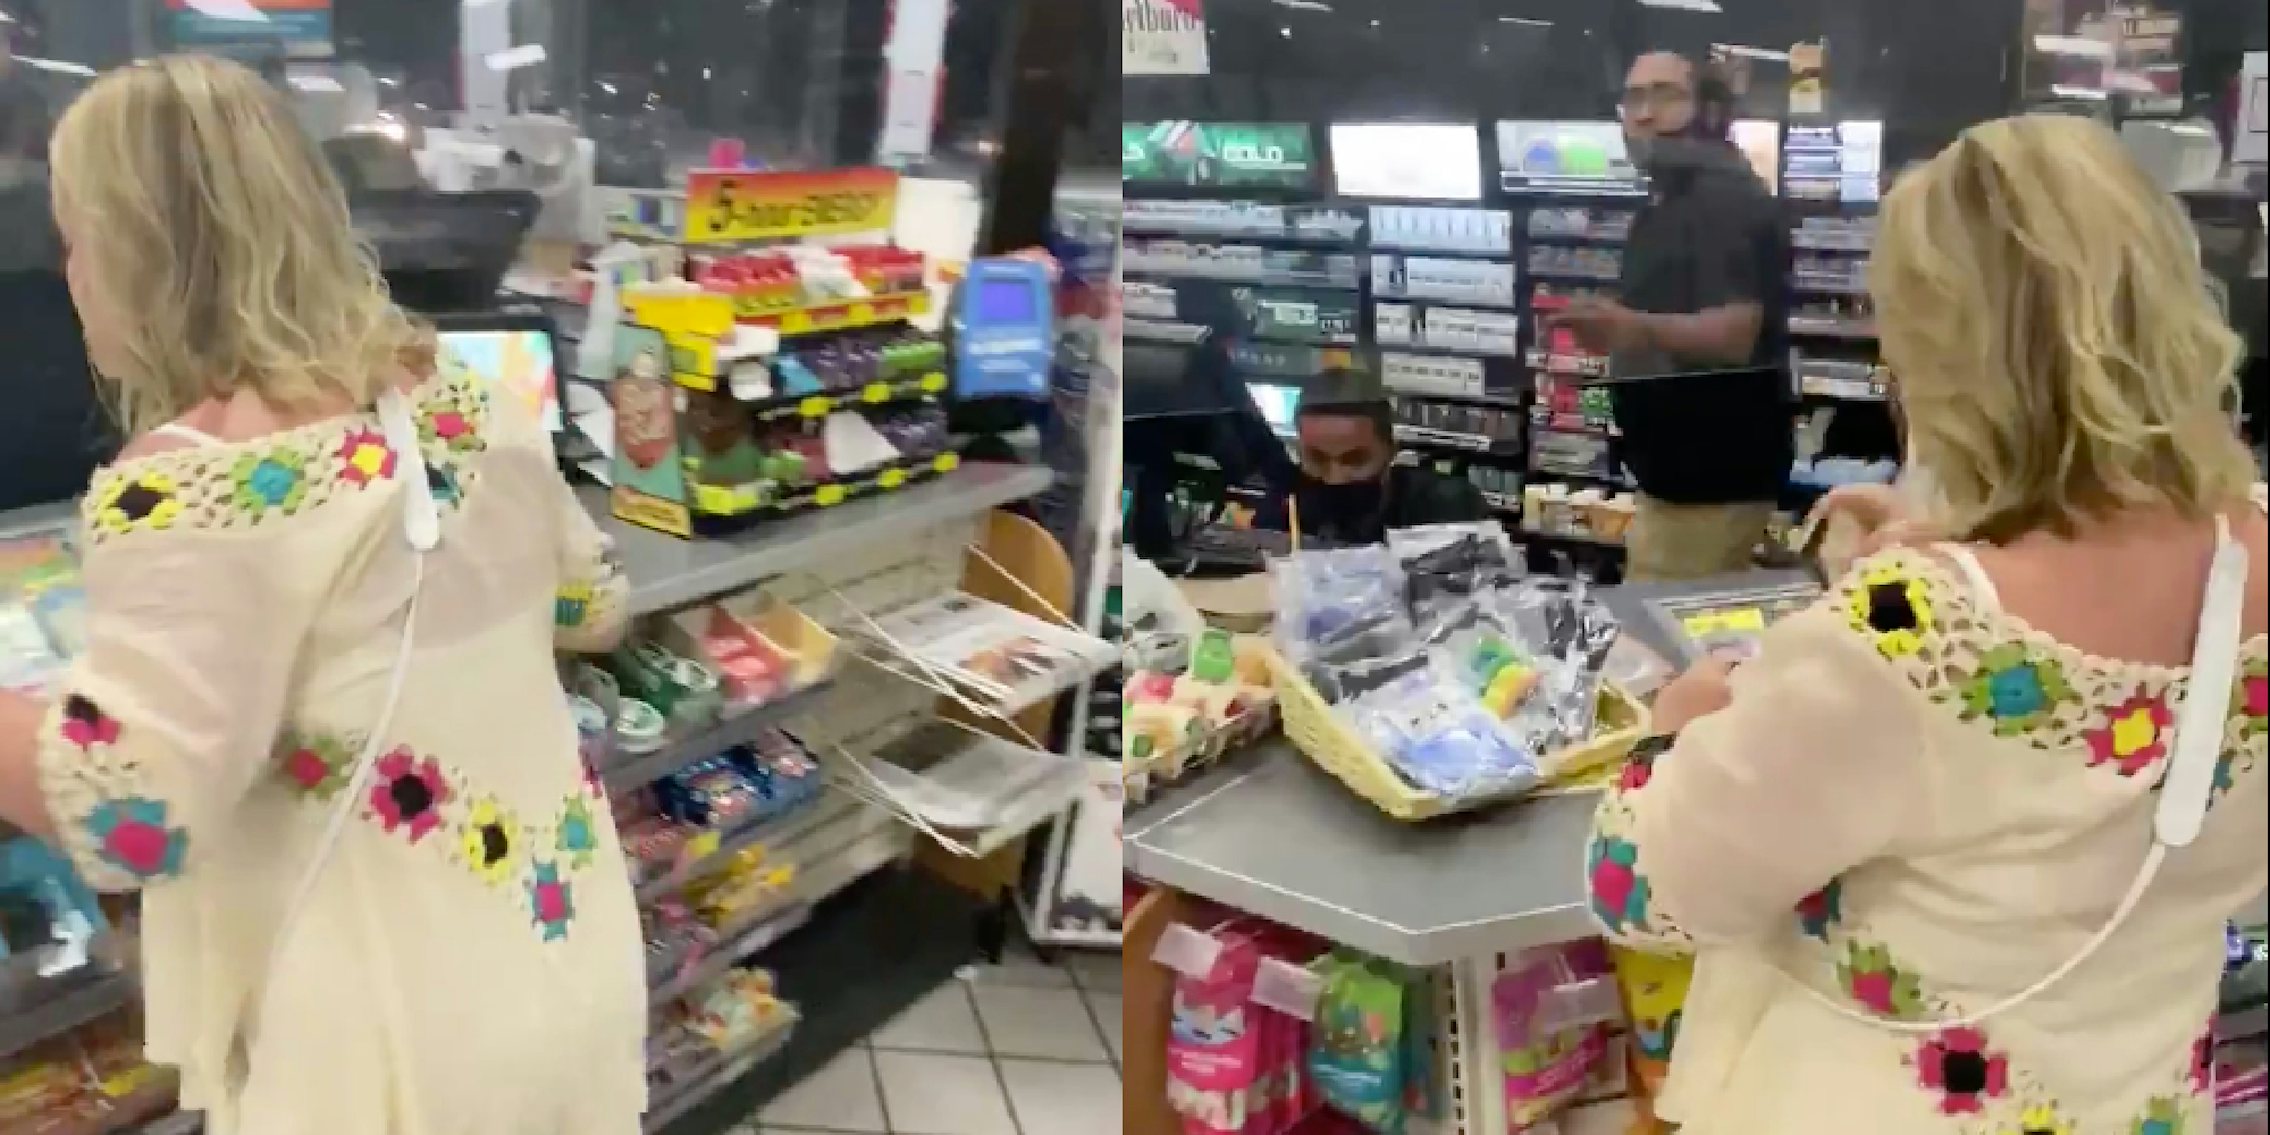 video shows karen spitting on gas station worker